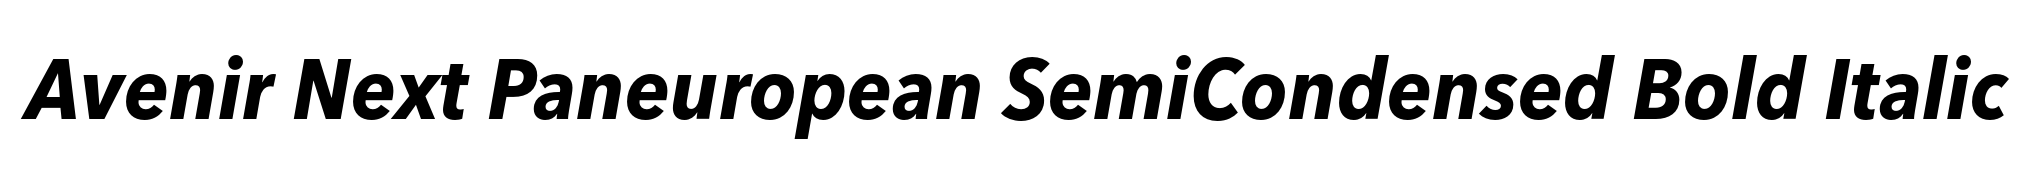 Avenir Next Paneuropean SemiCondensed Bold Italic image